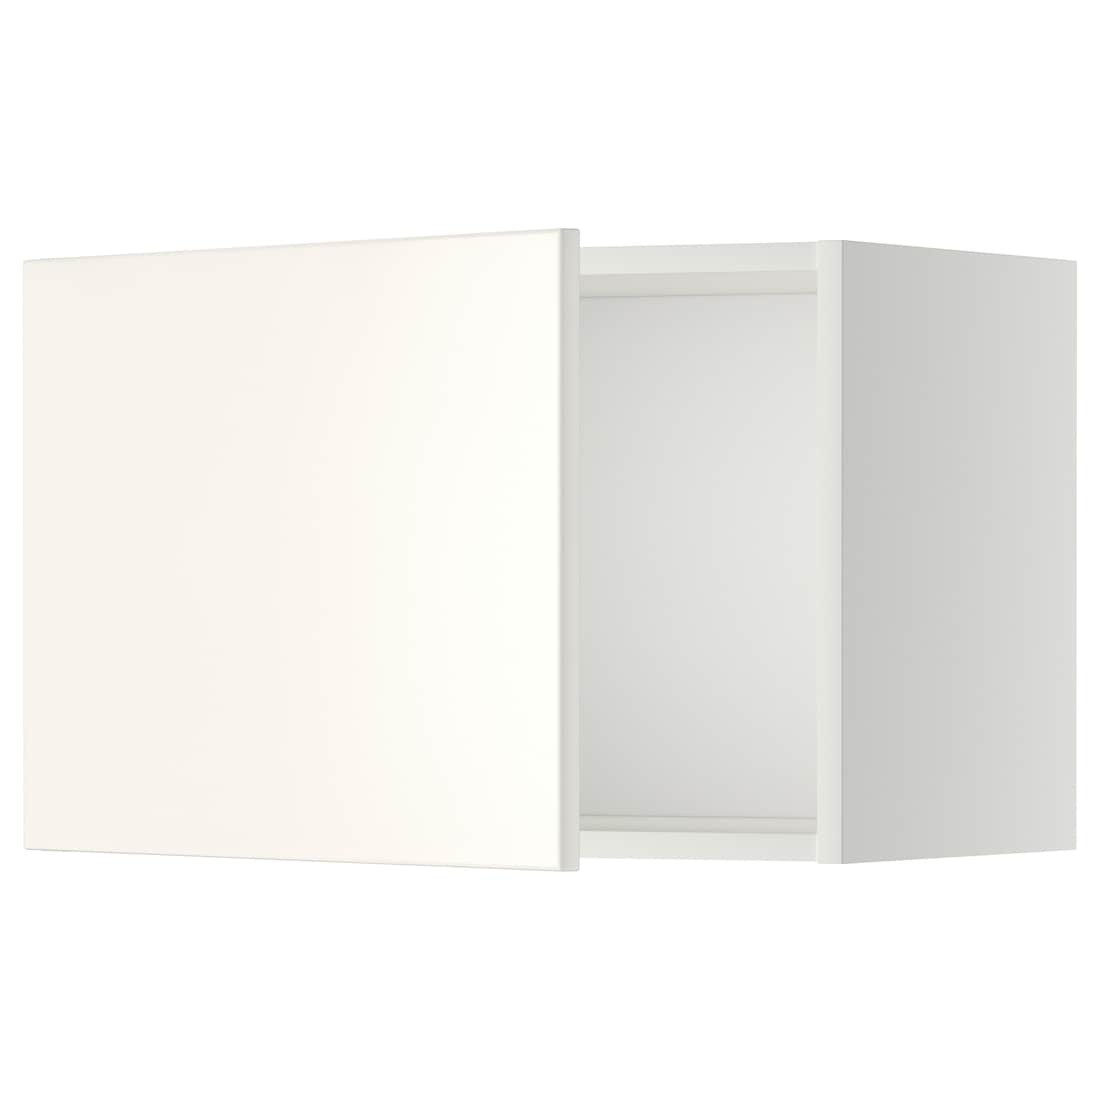 IKEA METOD МЕТОД Настенный шкаф, белый / Veddinge белый, 60x40 см 19465155 194.651.55